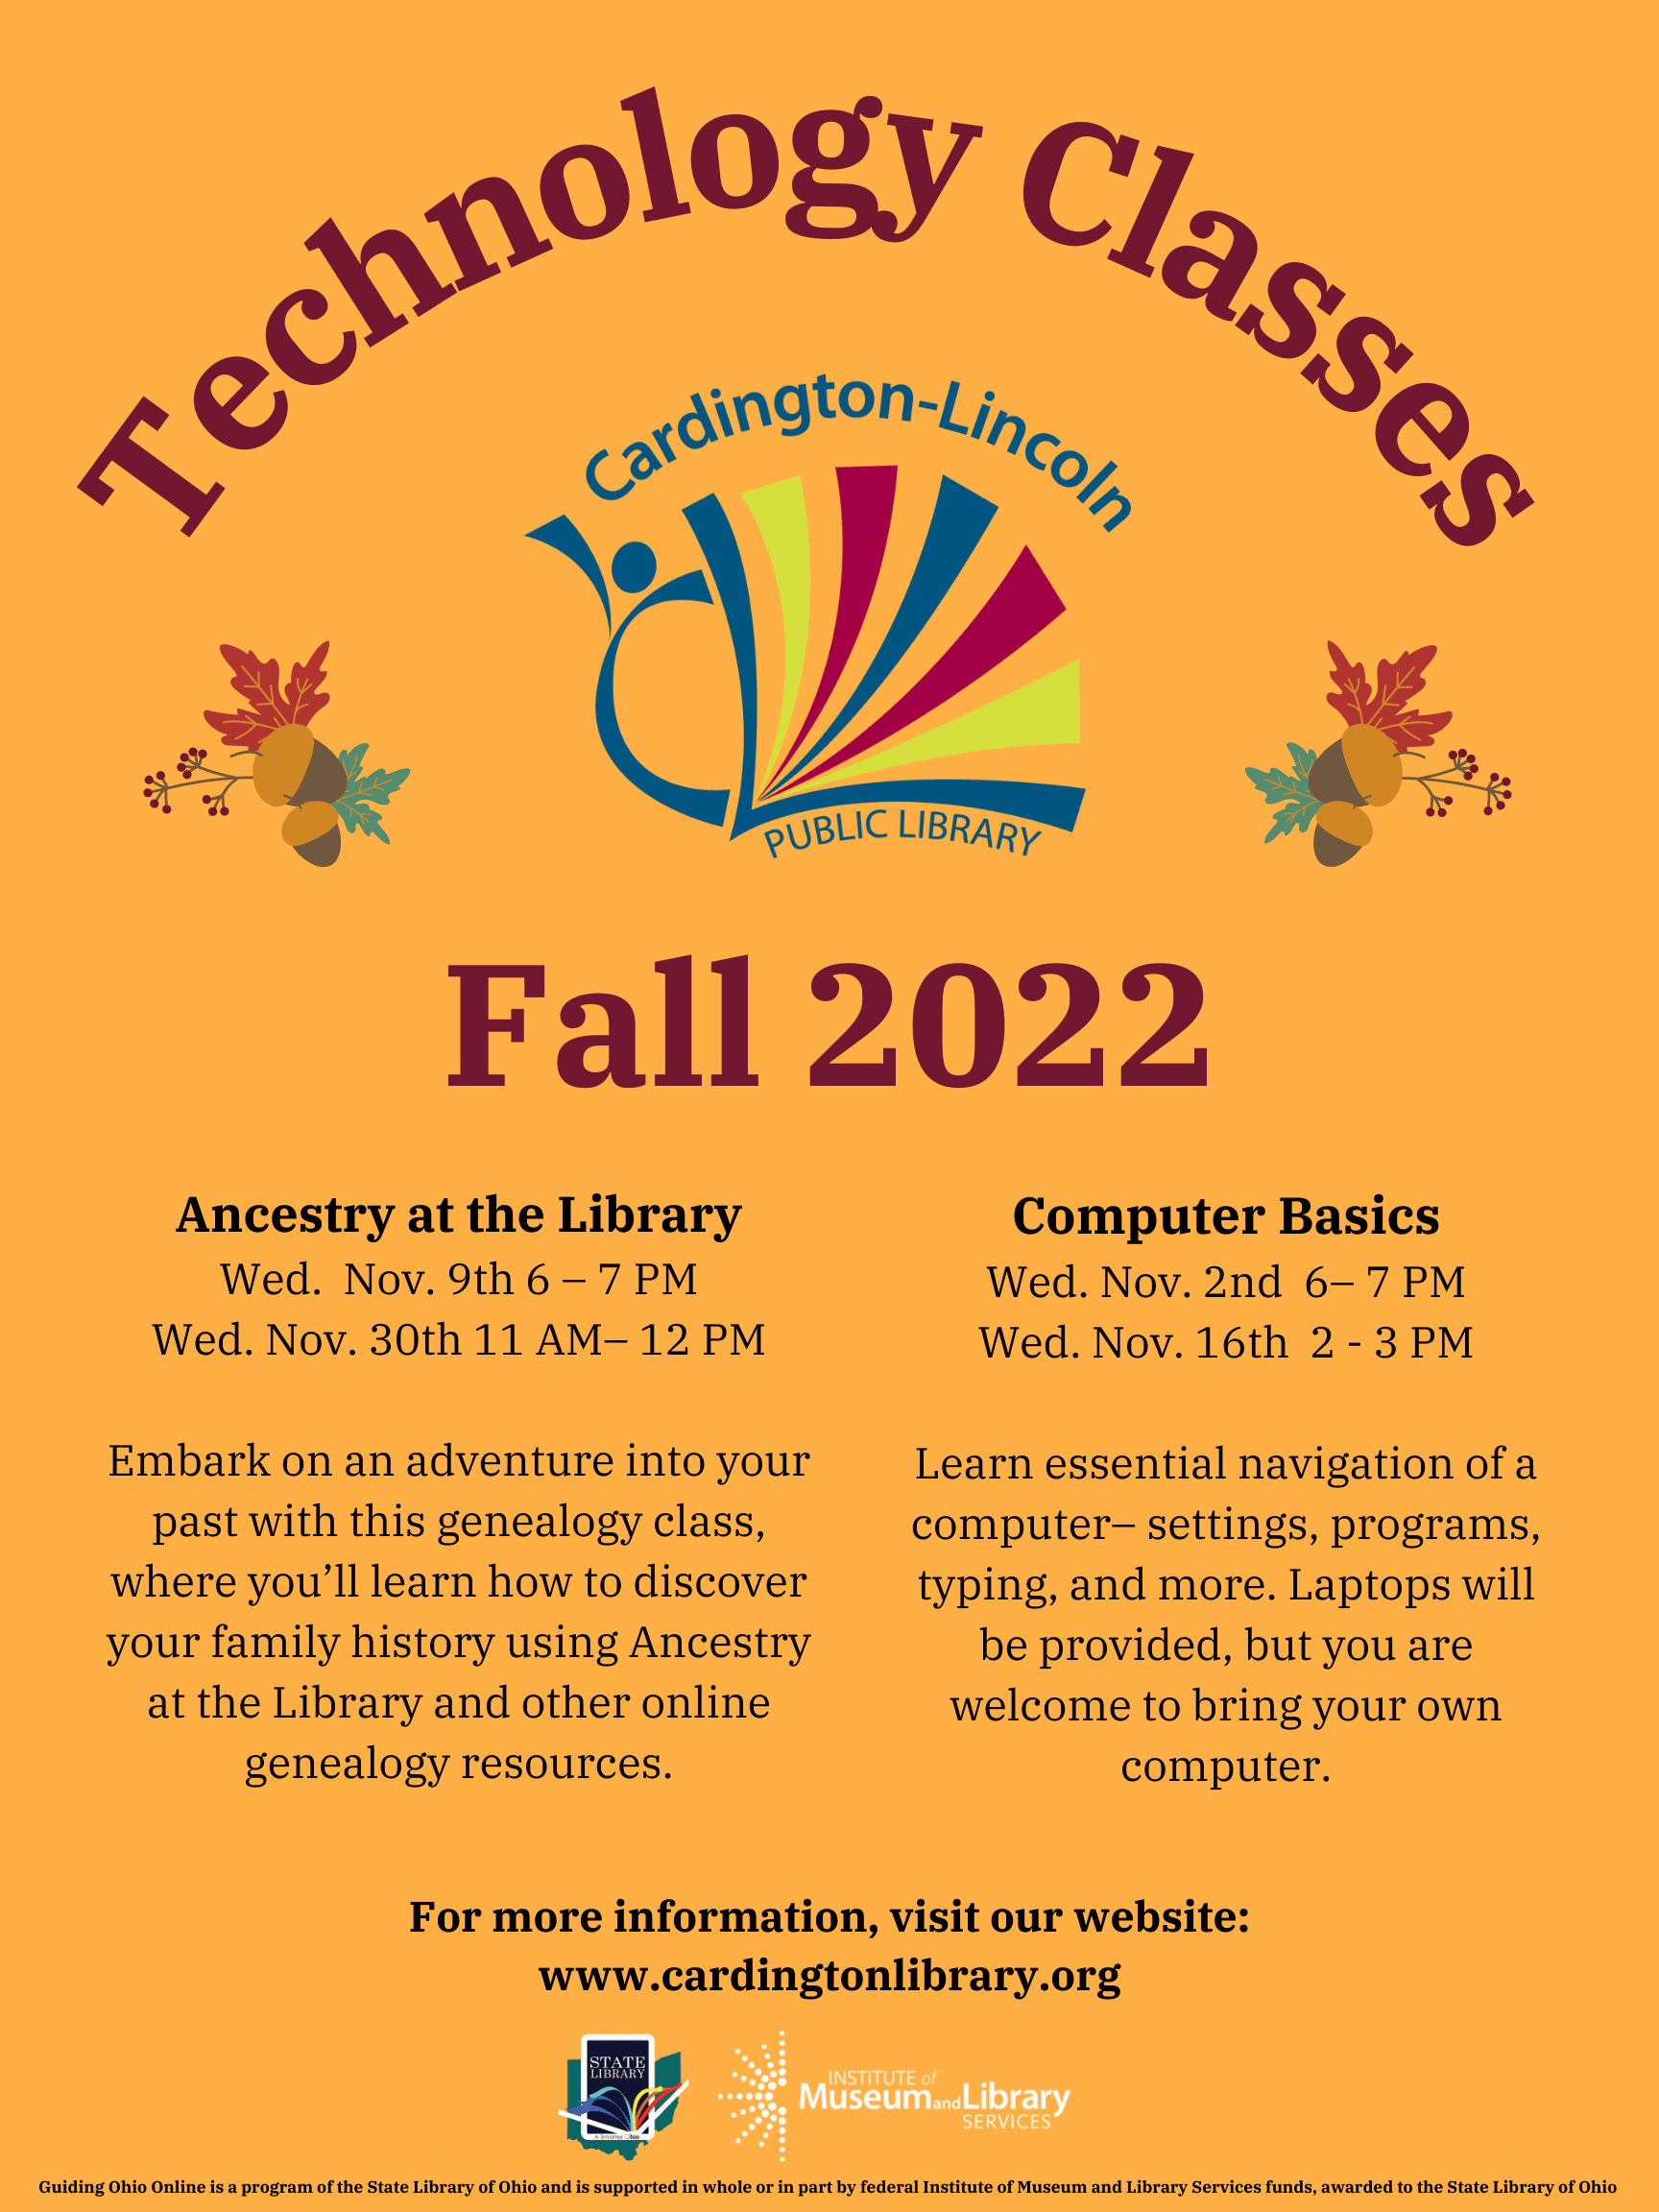 Fall Technology Classes